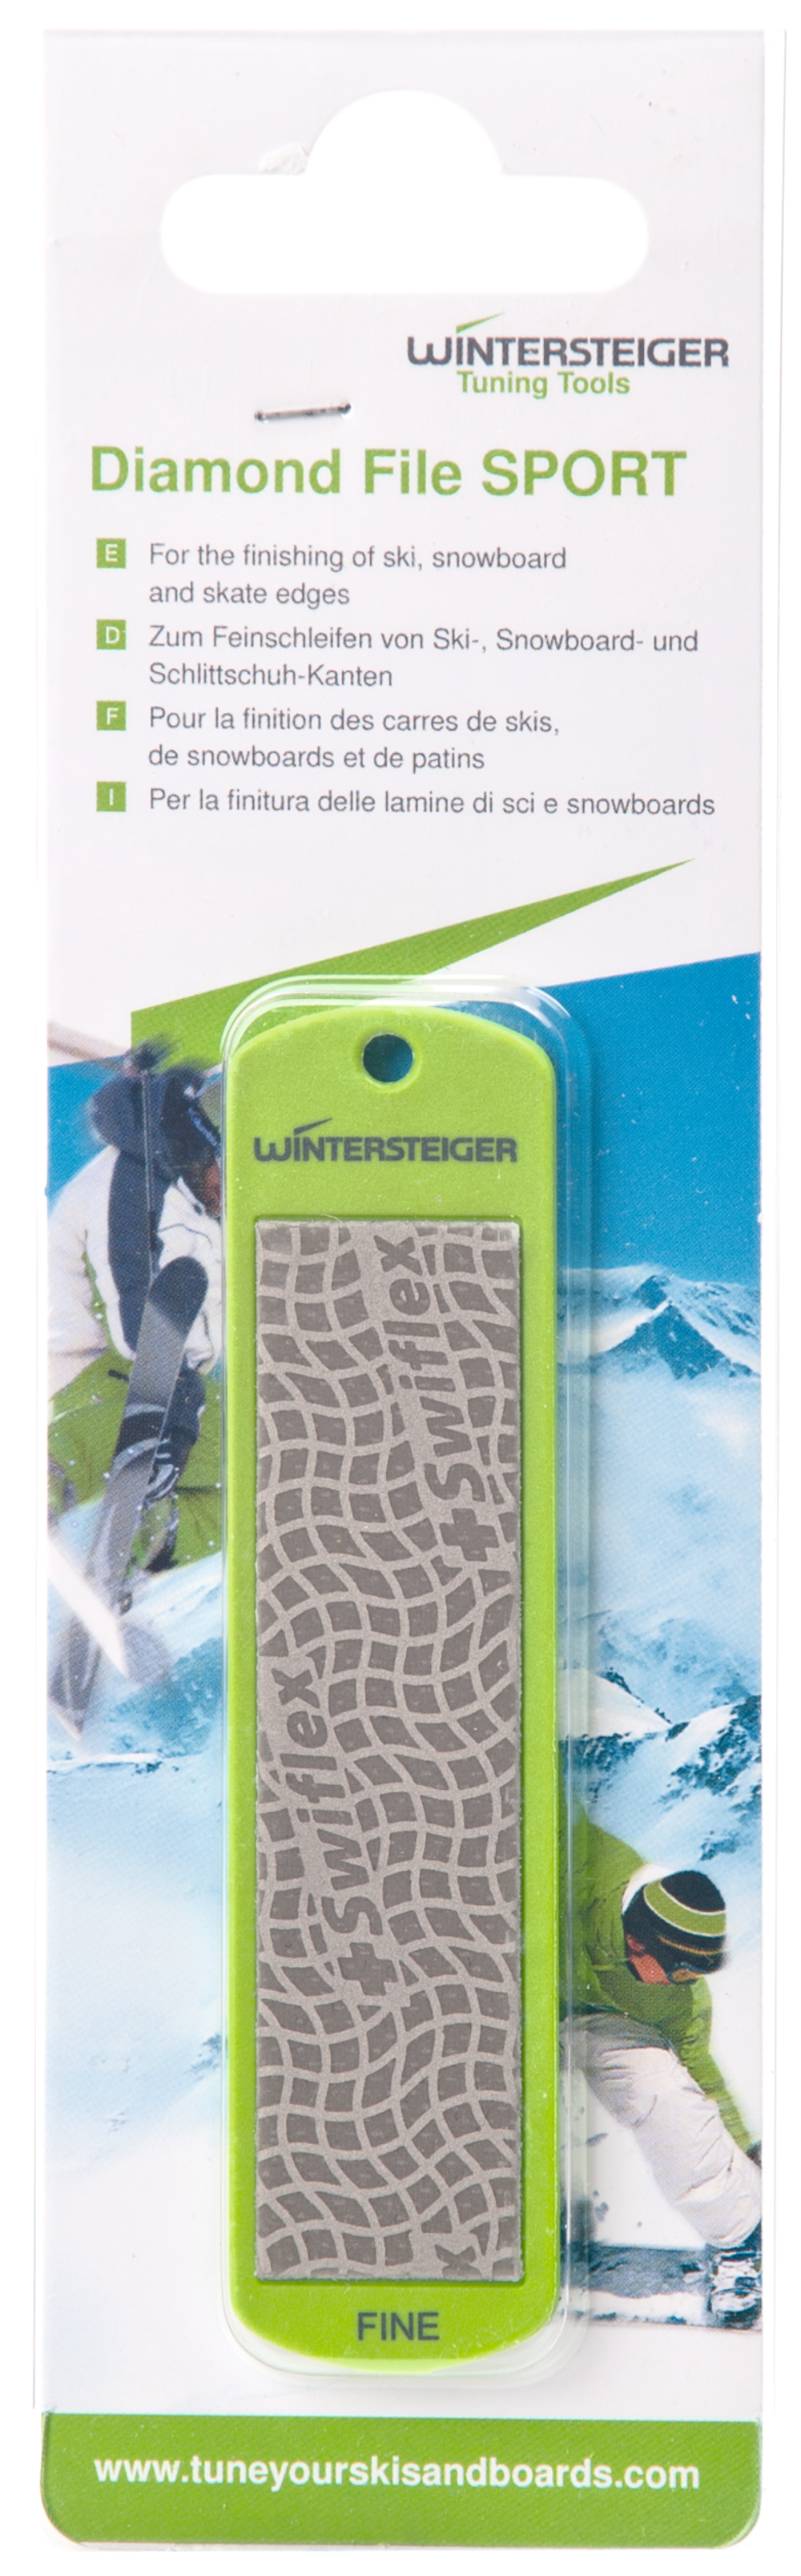 Wintersteiger Tuning Supplies – AJ Motion Sports